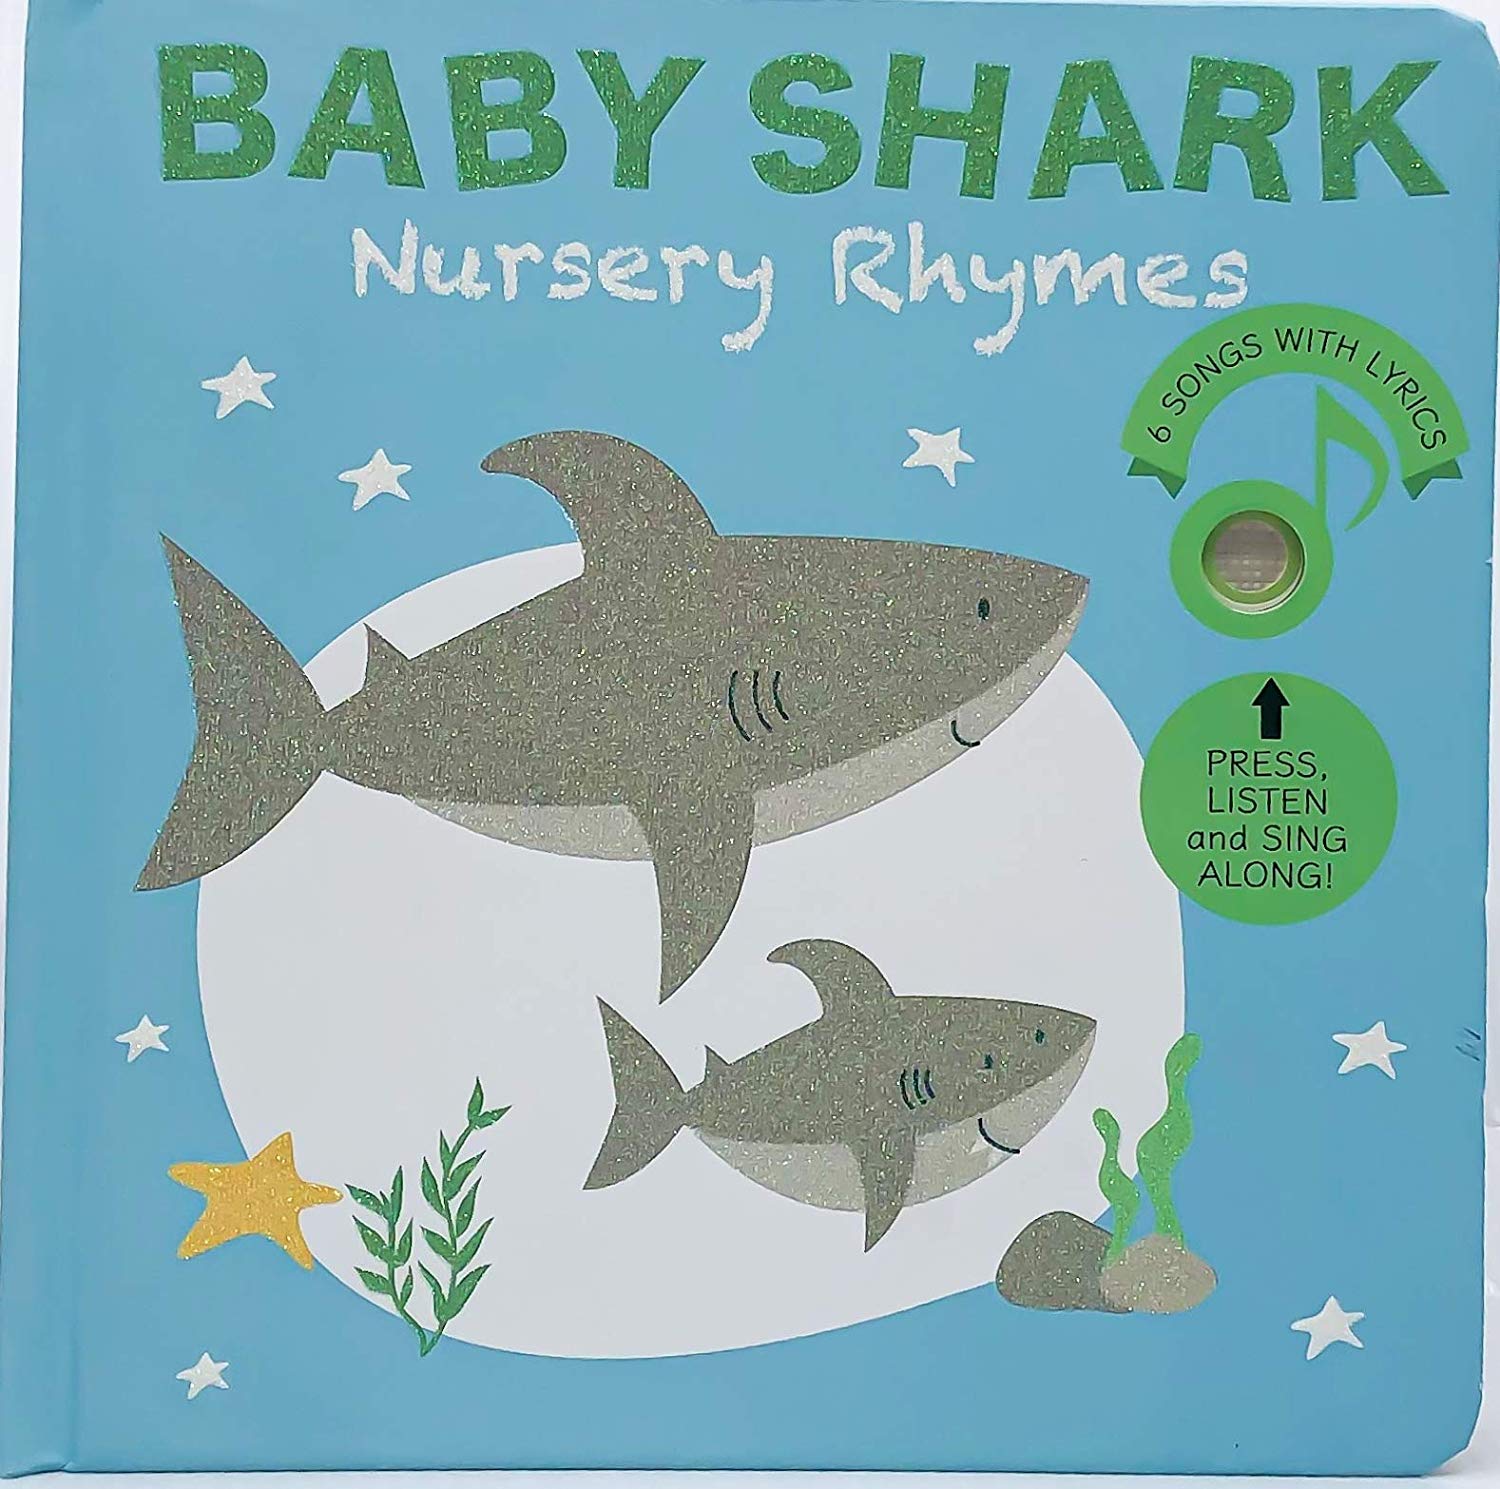 Baby Shark Nursery Rhymes  Sound Book (6 songs with lyrics)